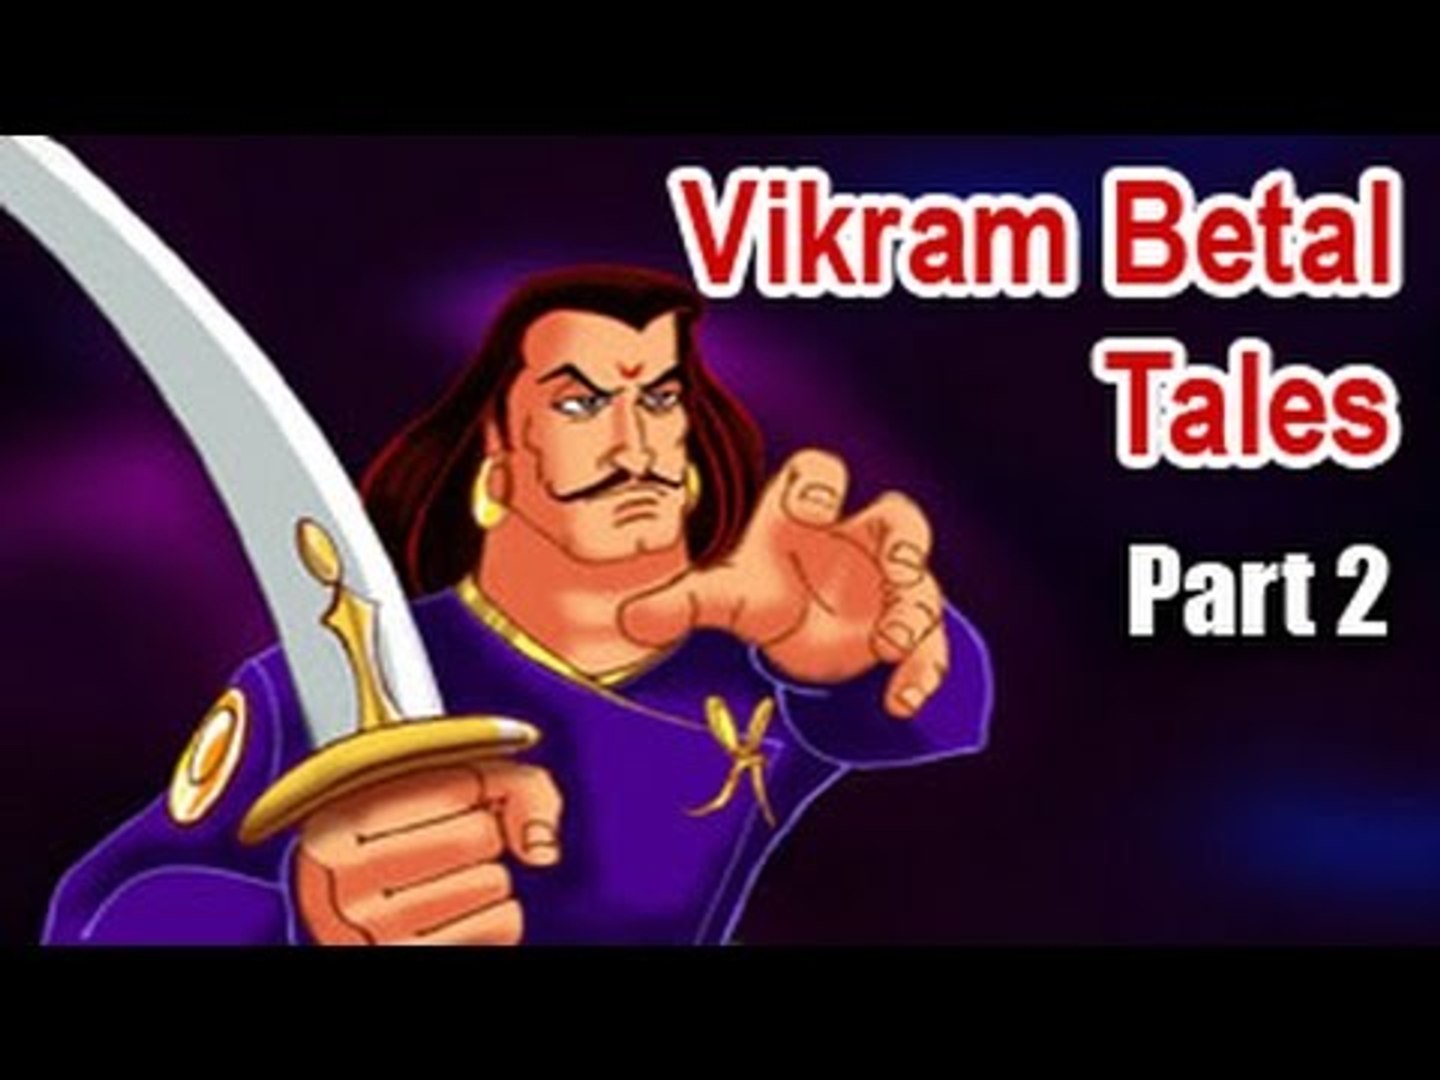 Vikram betal cartoon network